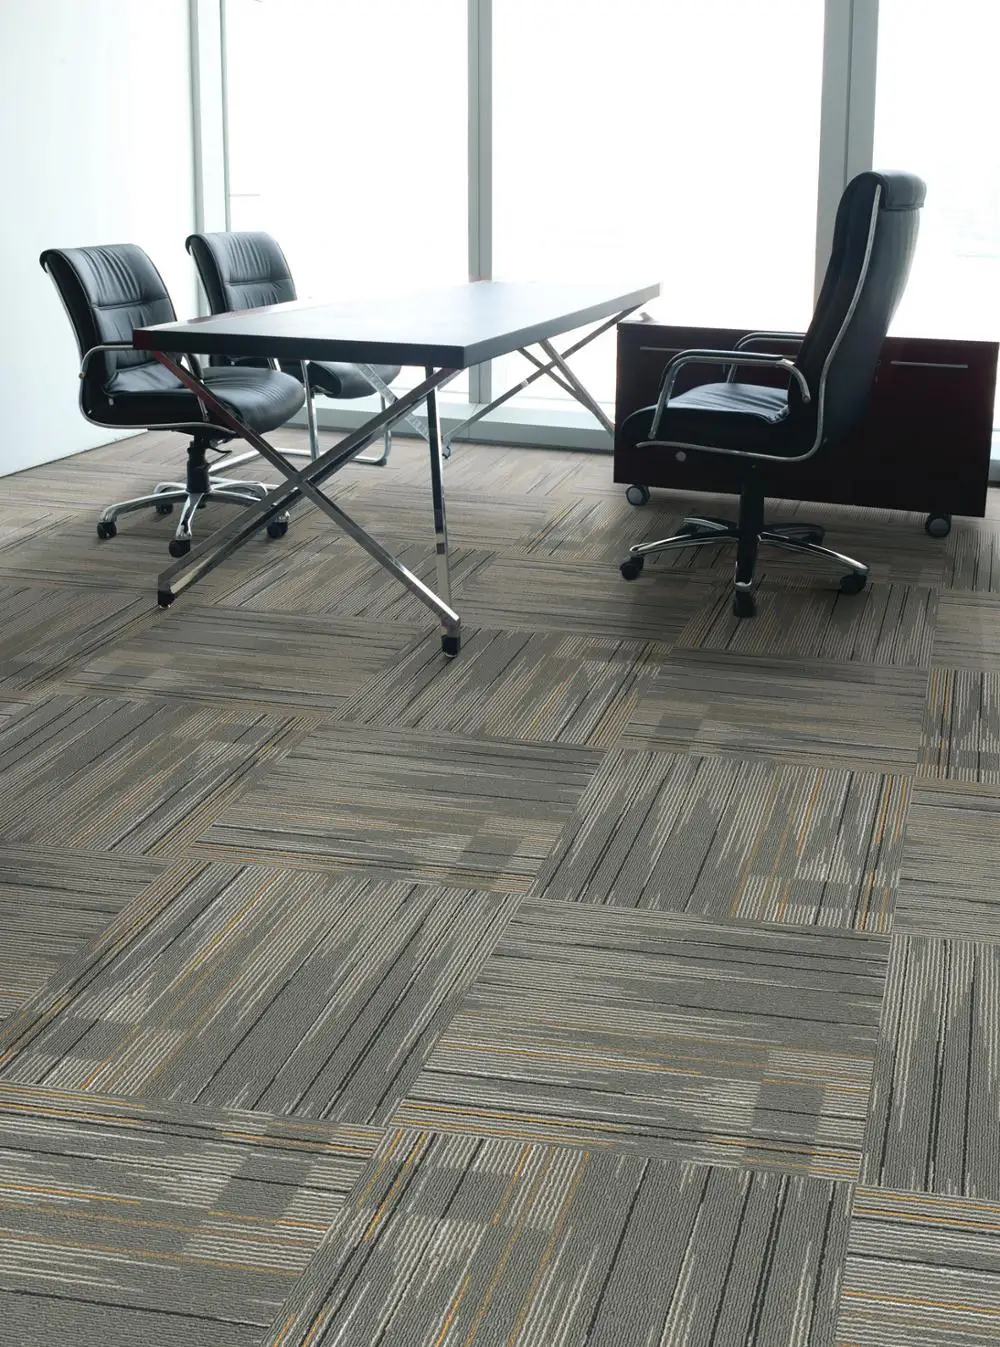 PVC Backing office user Square Carpet Tiles